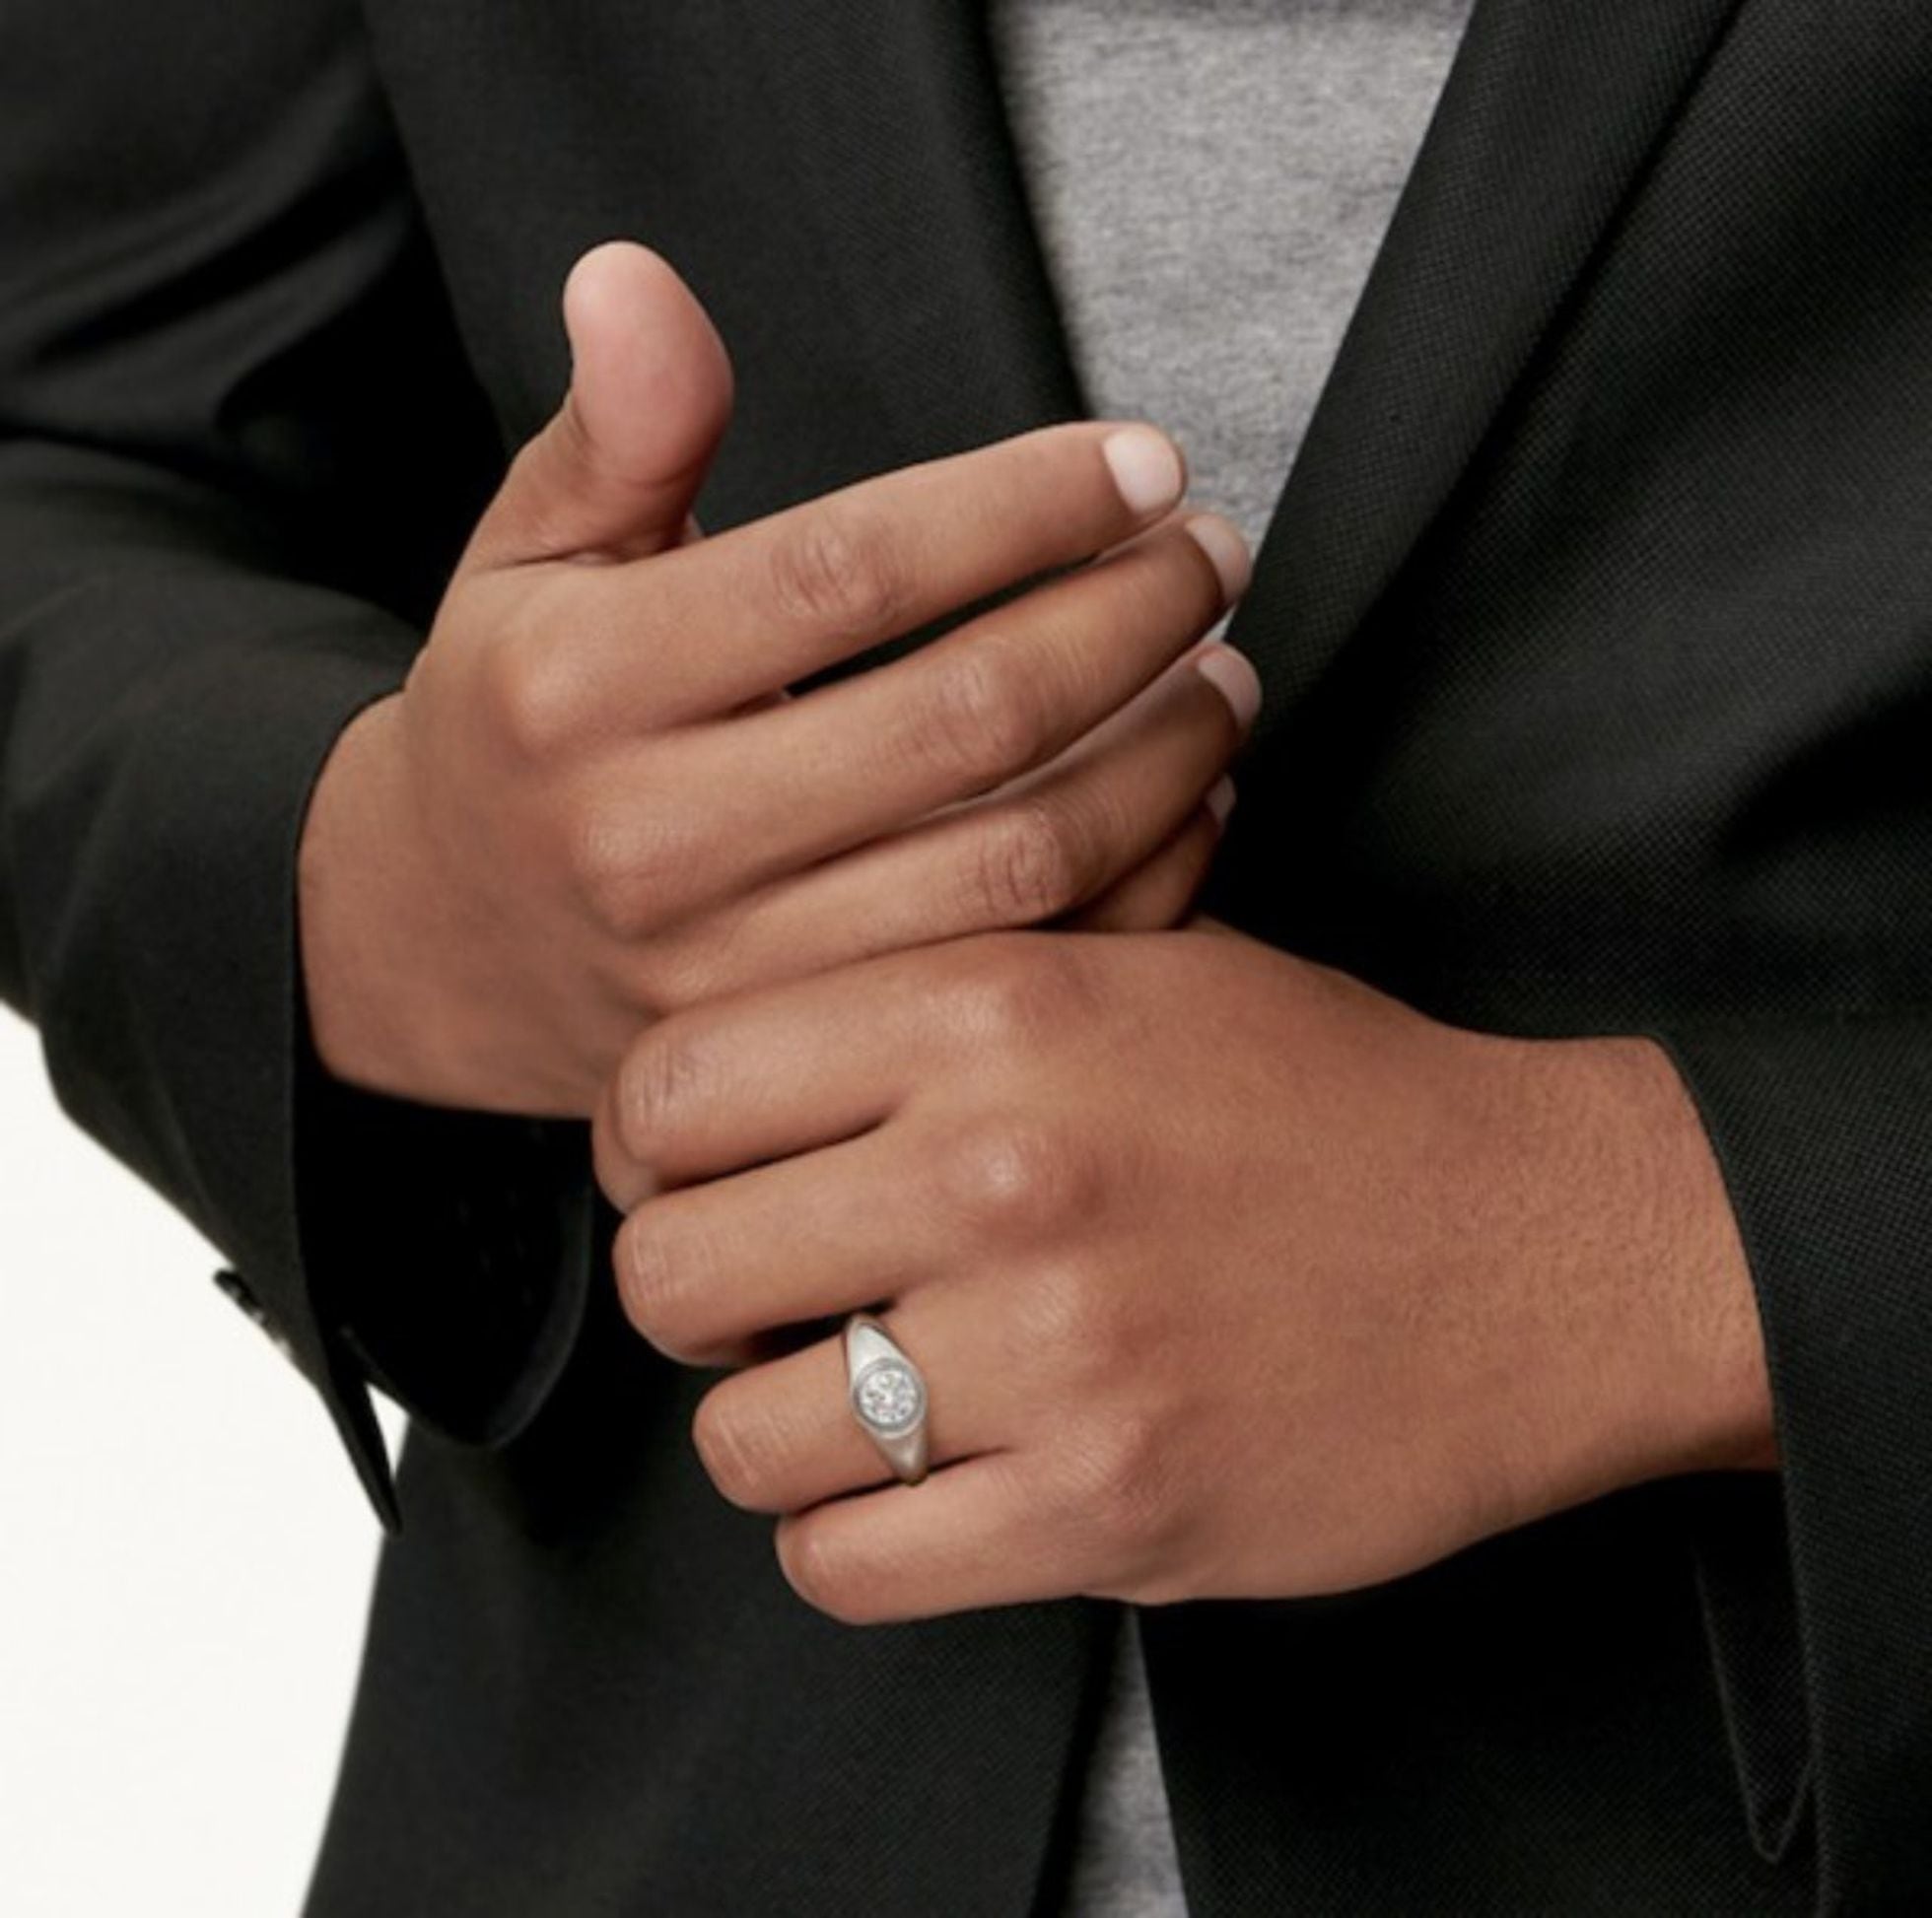 Tiffany lanza primer anillo compromiso para hombres Gente | PAÍS